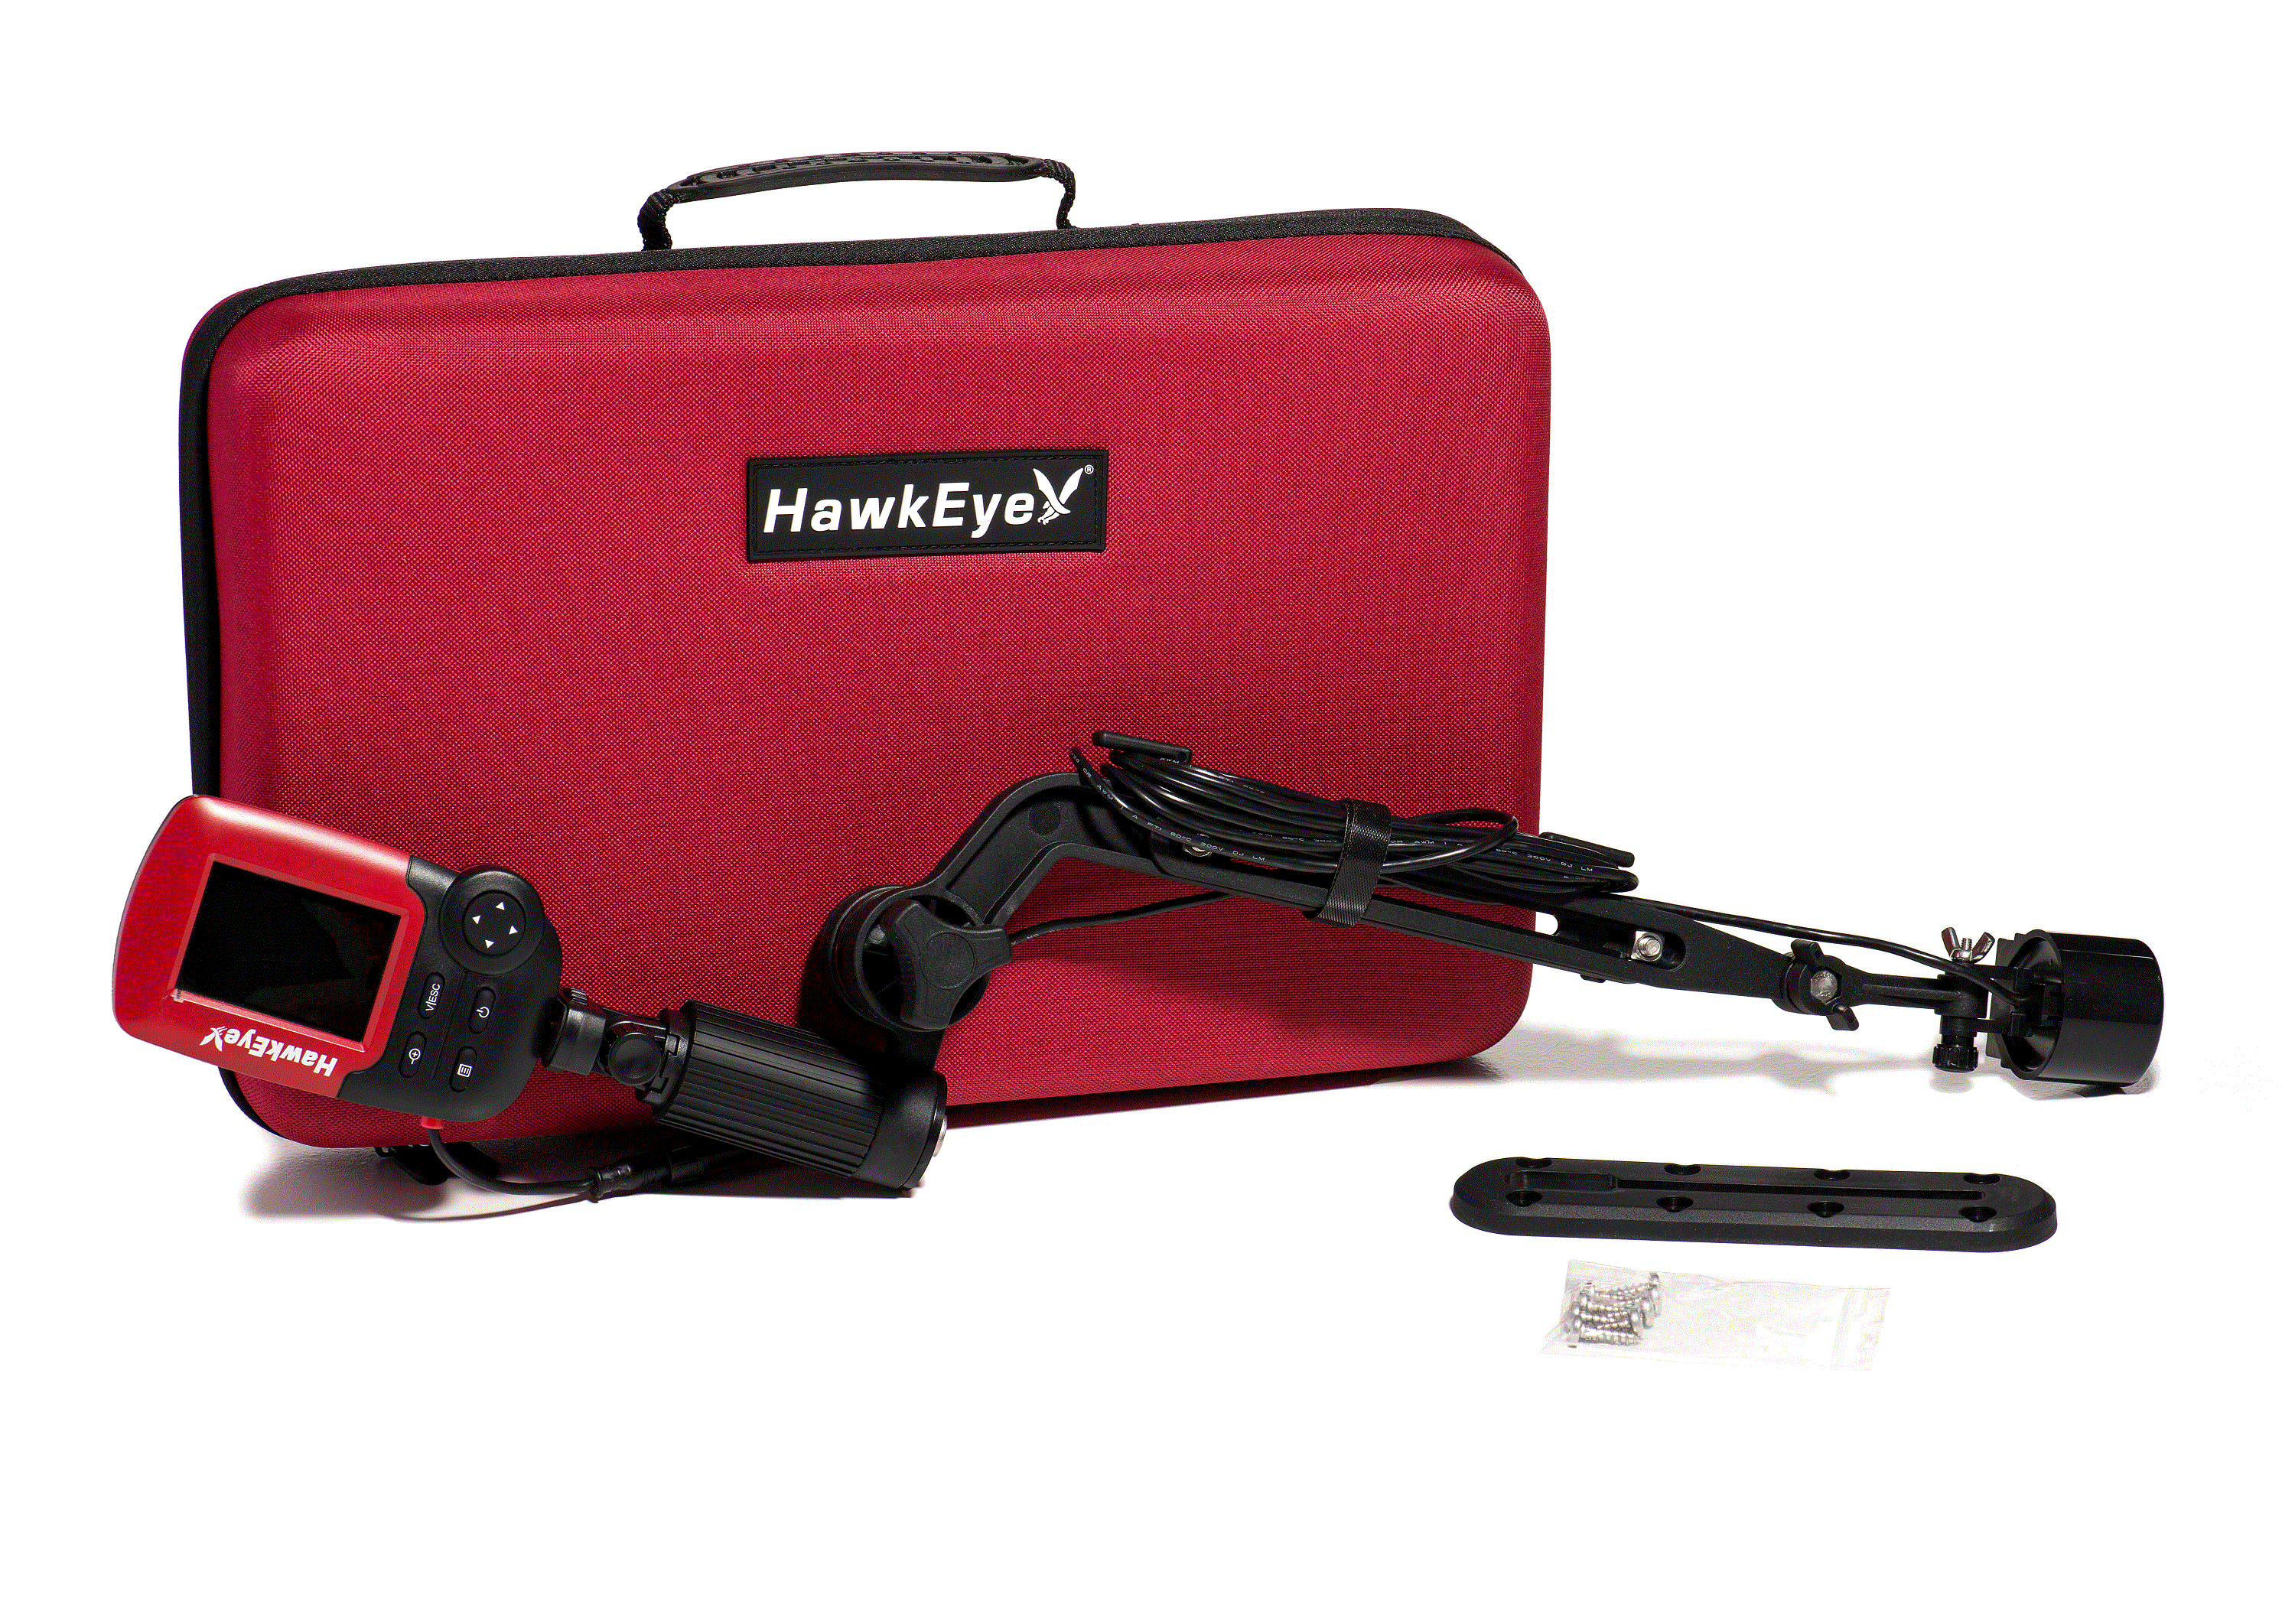 Hawkeye FishTrax 1C-K PaddleSport Fishfinder w-Carrying Case